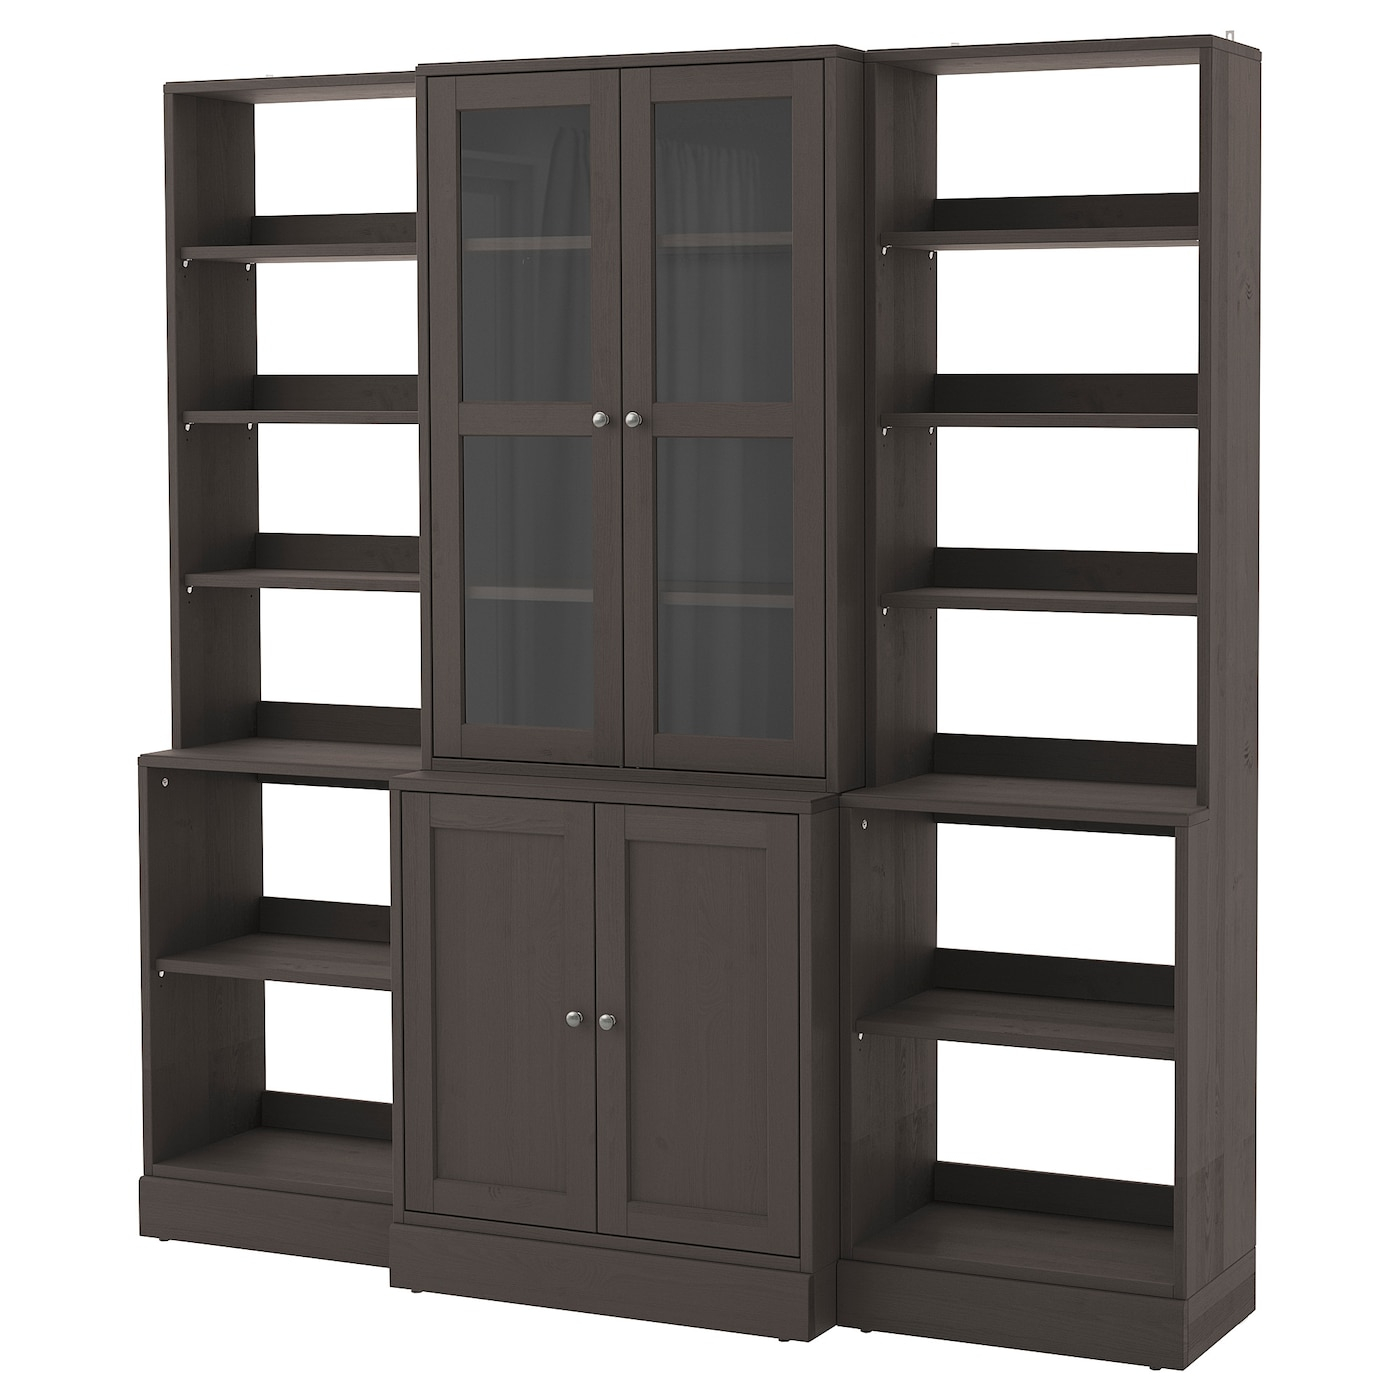 Havsta Storage Combination Wglass Doors Dark Brown regarding sizing 1400 X 1400